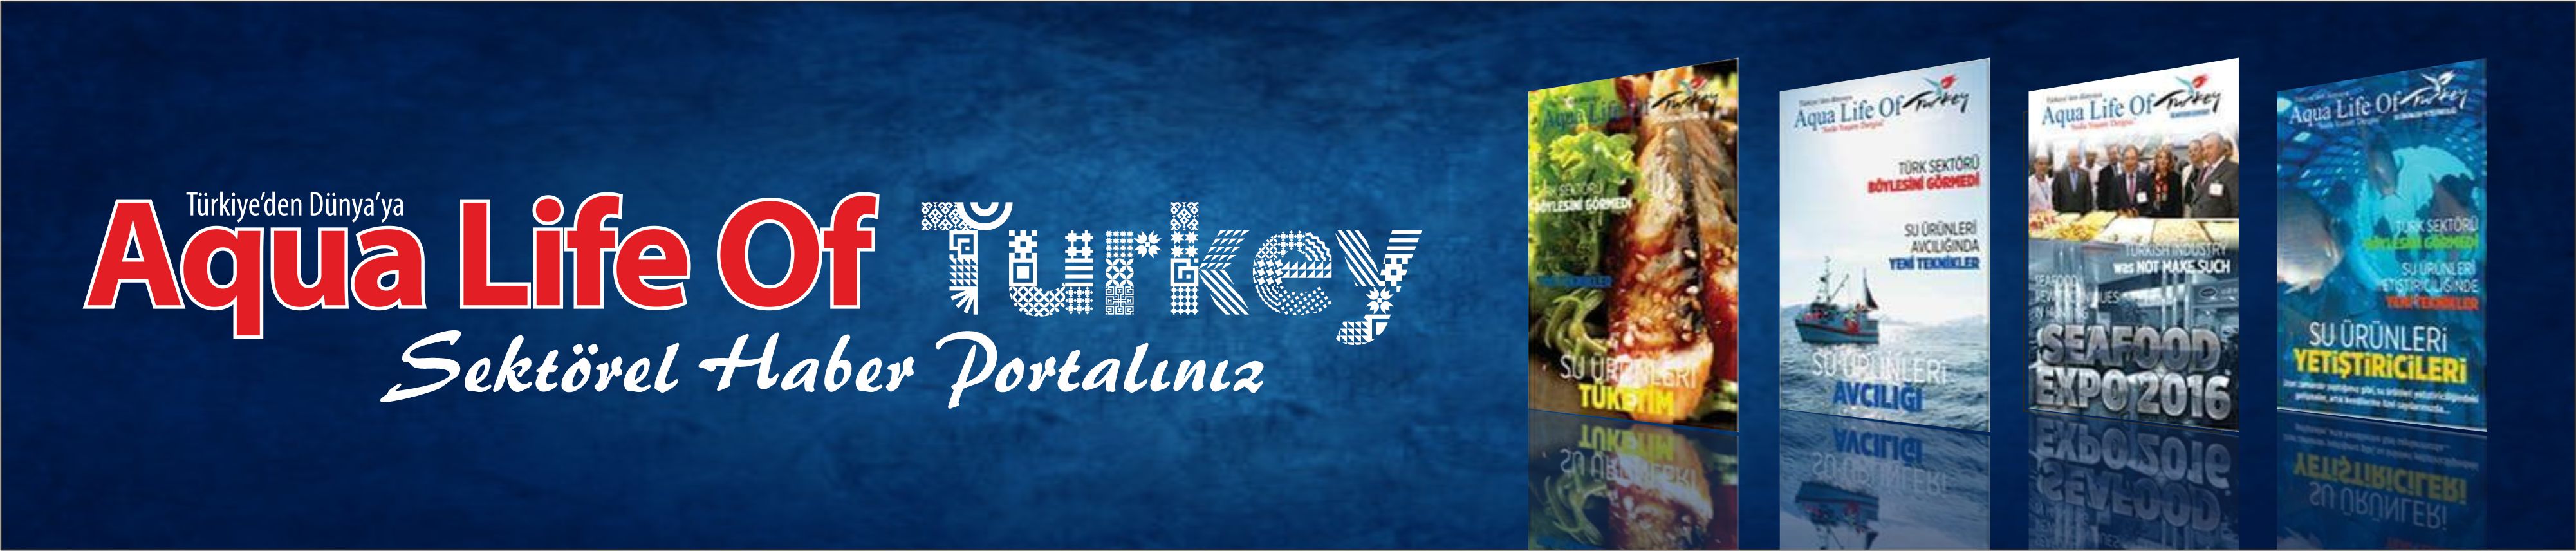 Aqua Life of Turkey